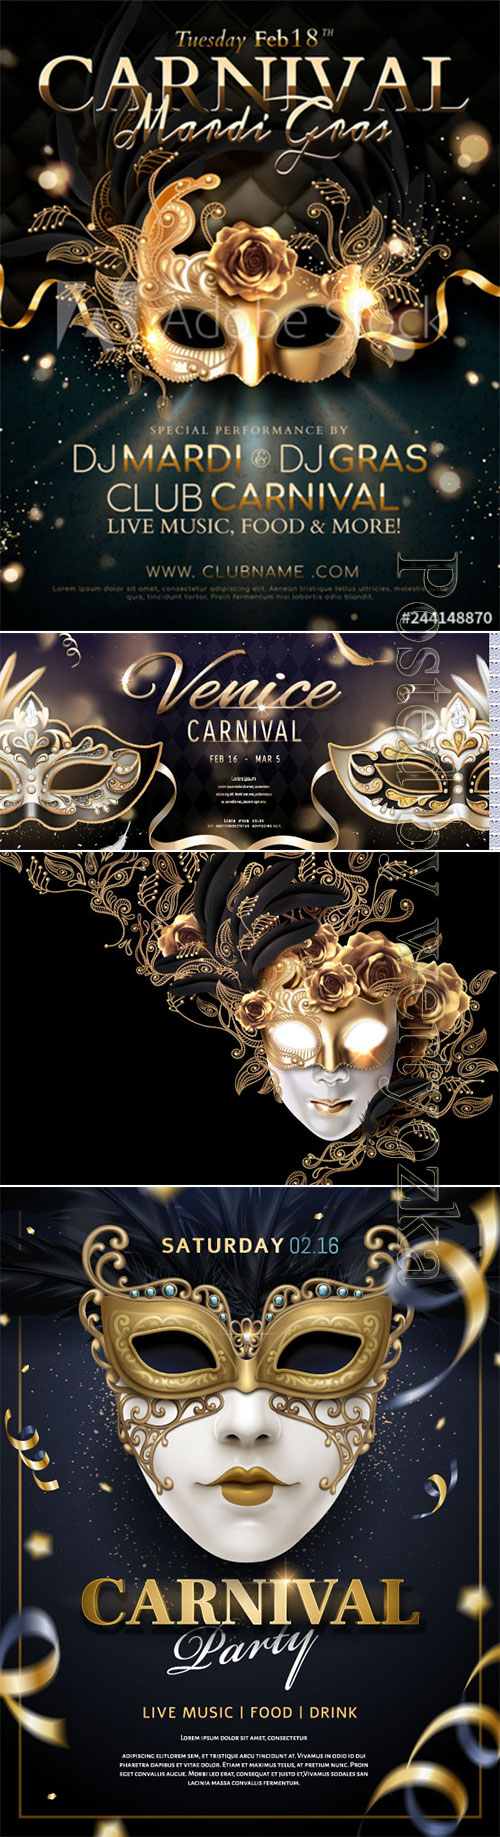 Venice carnival design, Mardi gras